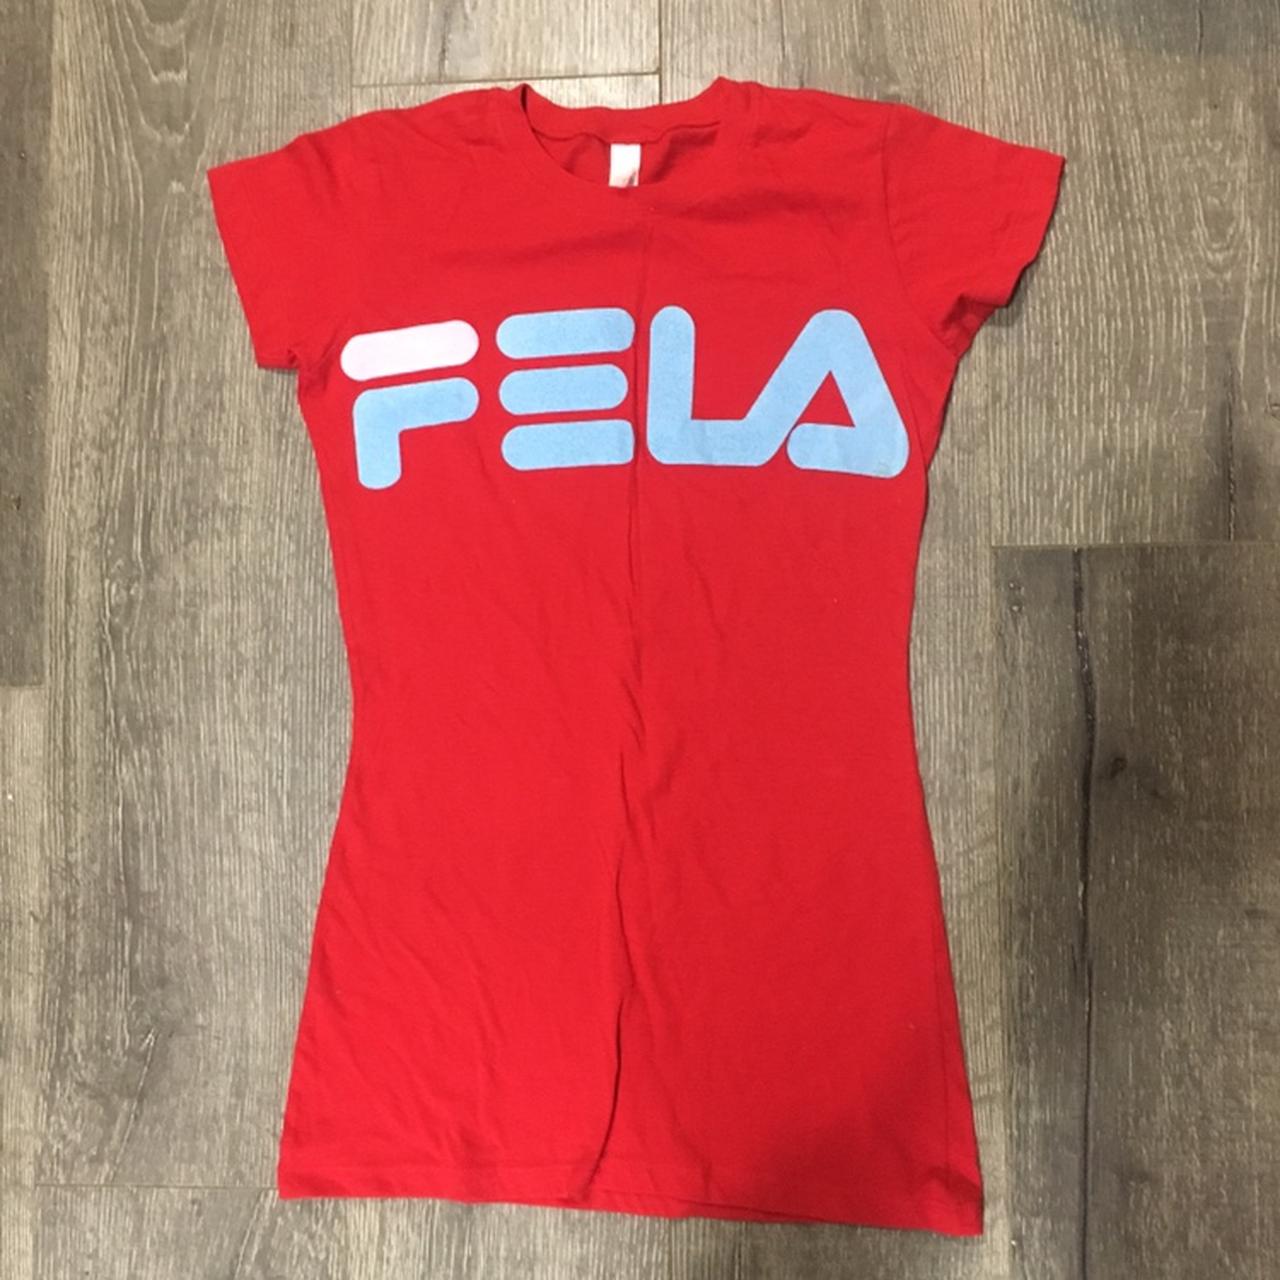 Fela Fila shirt Rare and special play on words If... - Depop